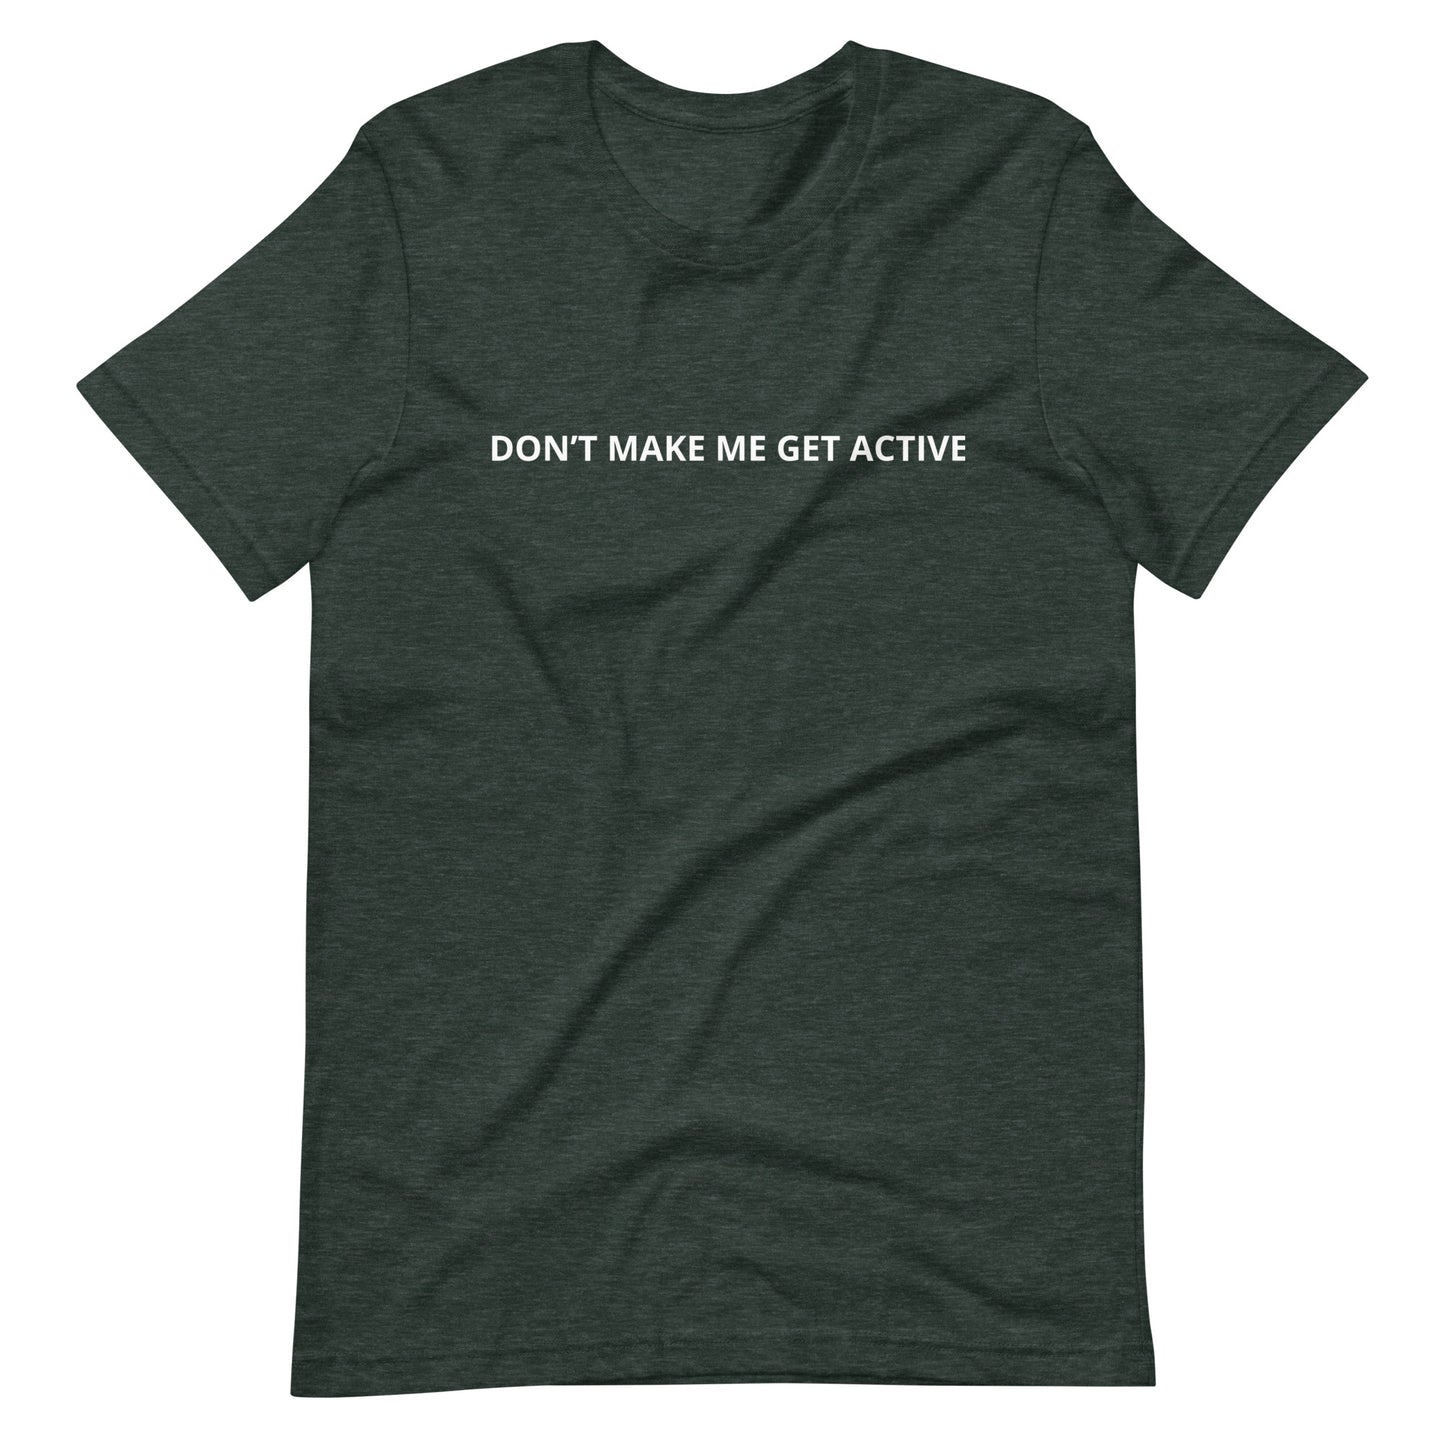 DON'T MAKE ME GET ACTIVE Unisex t-shirt